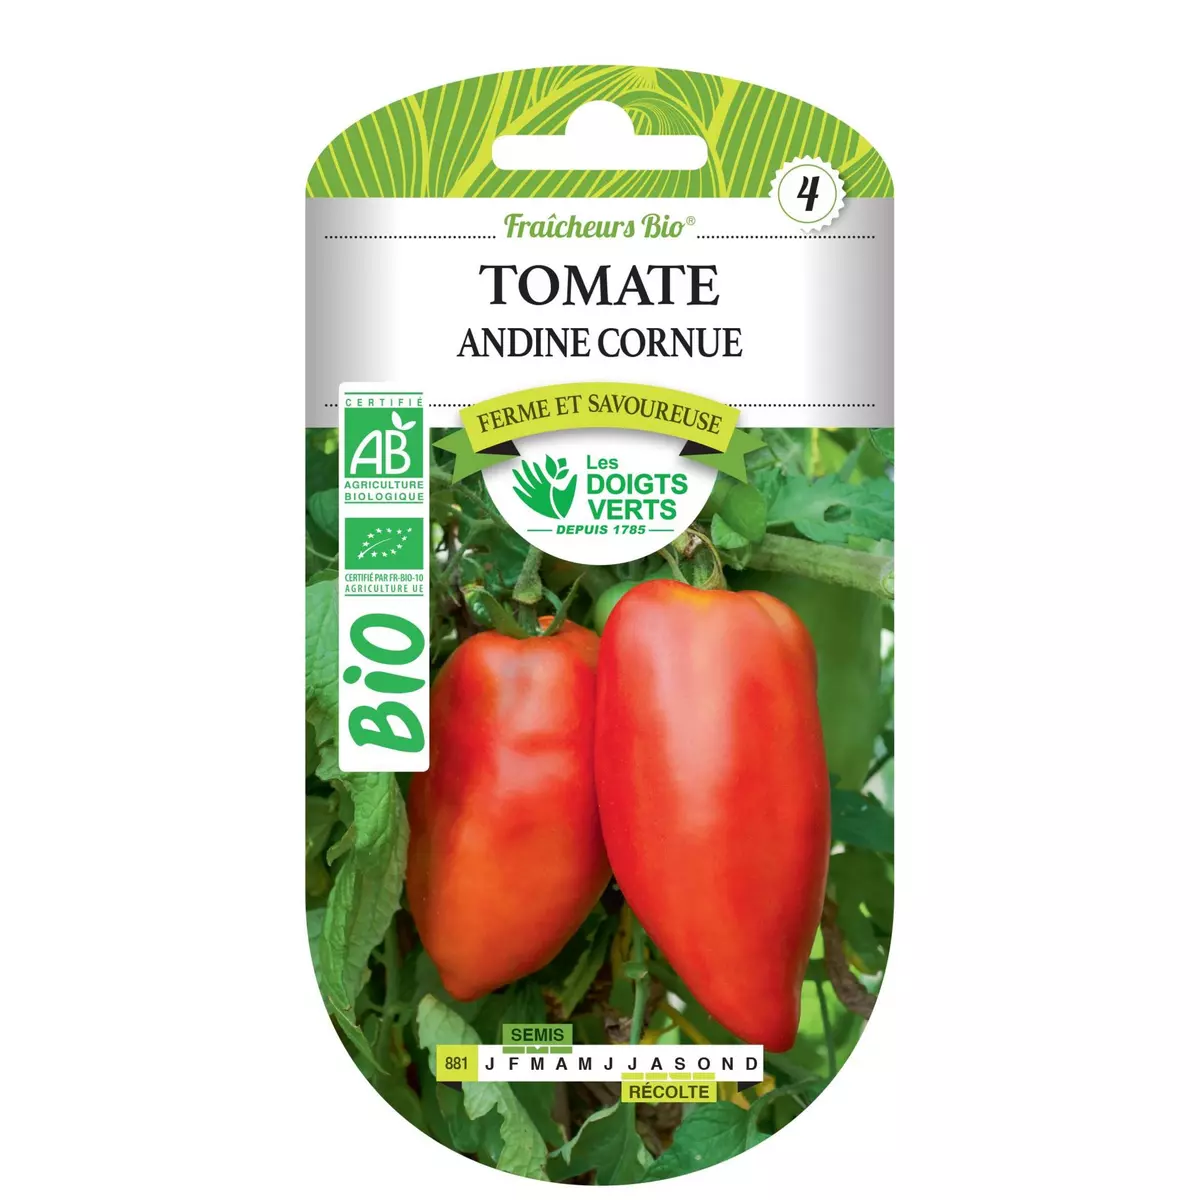 LES DOIGTS VERTS Graines tomate andine cornue BIO Les Doigts Verts